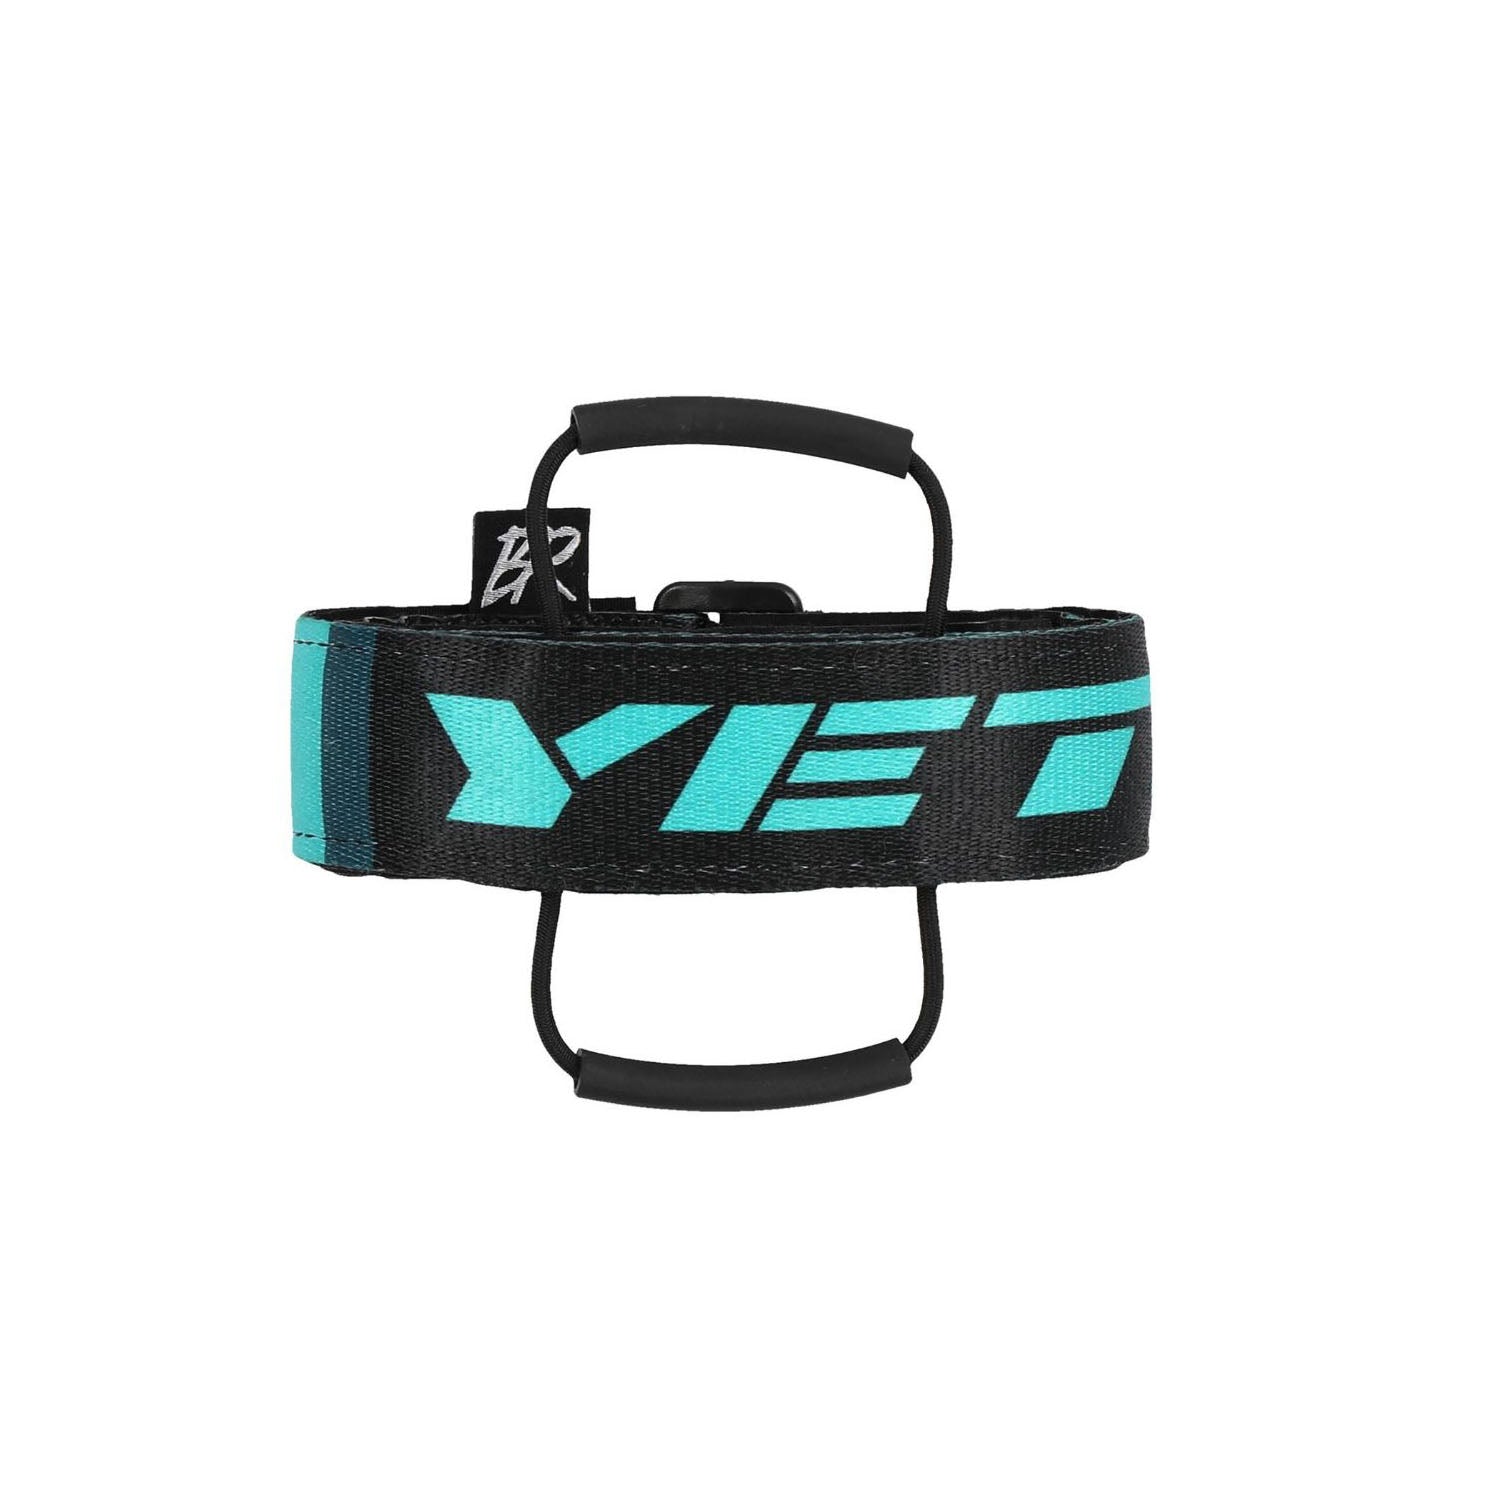 Backcountry Research Mutherload Yeti 1.5" Bike Rack Luggage Strap